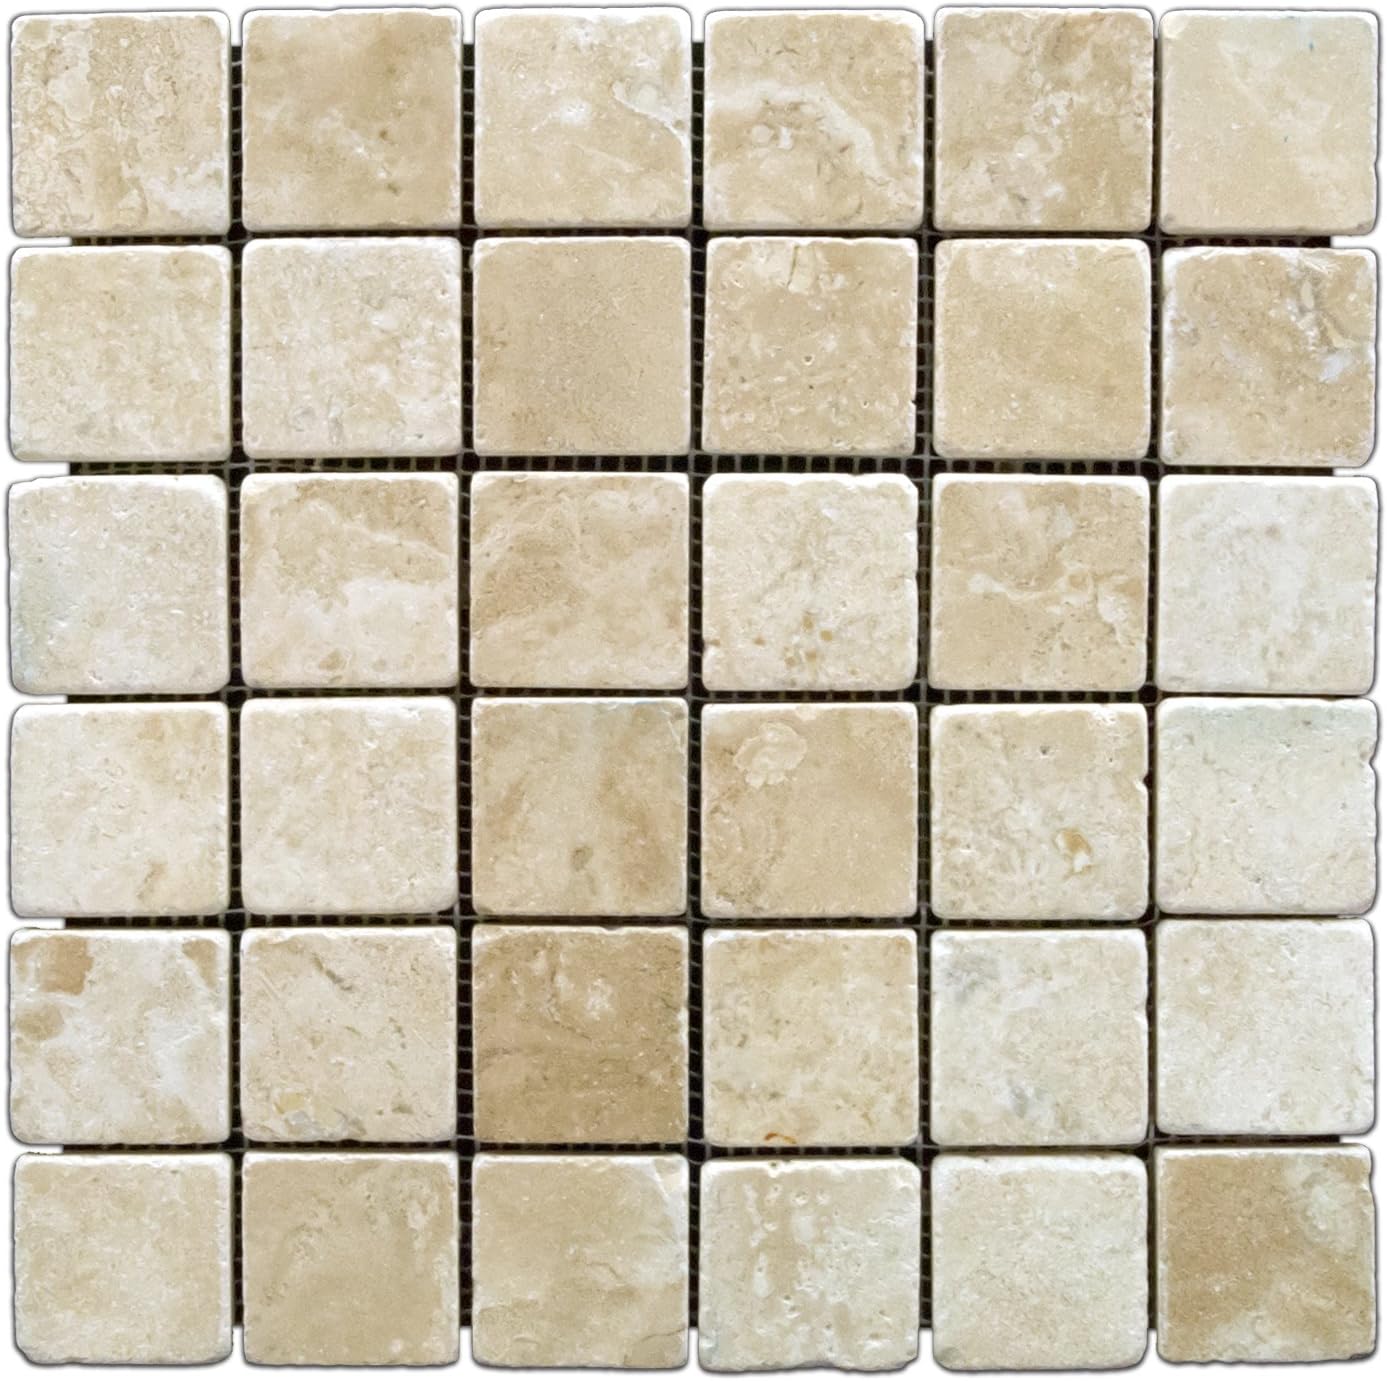 Durango Cream Travertine 2x2 Tumbled Mosaic Floor Wall Tile